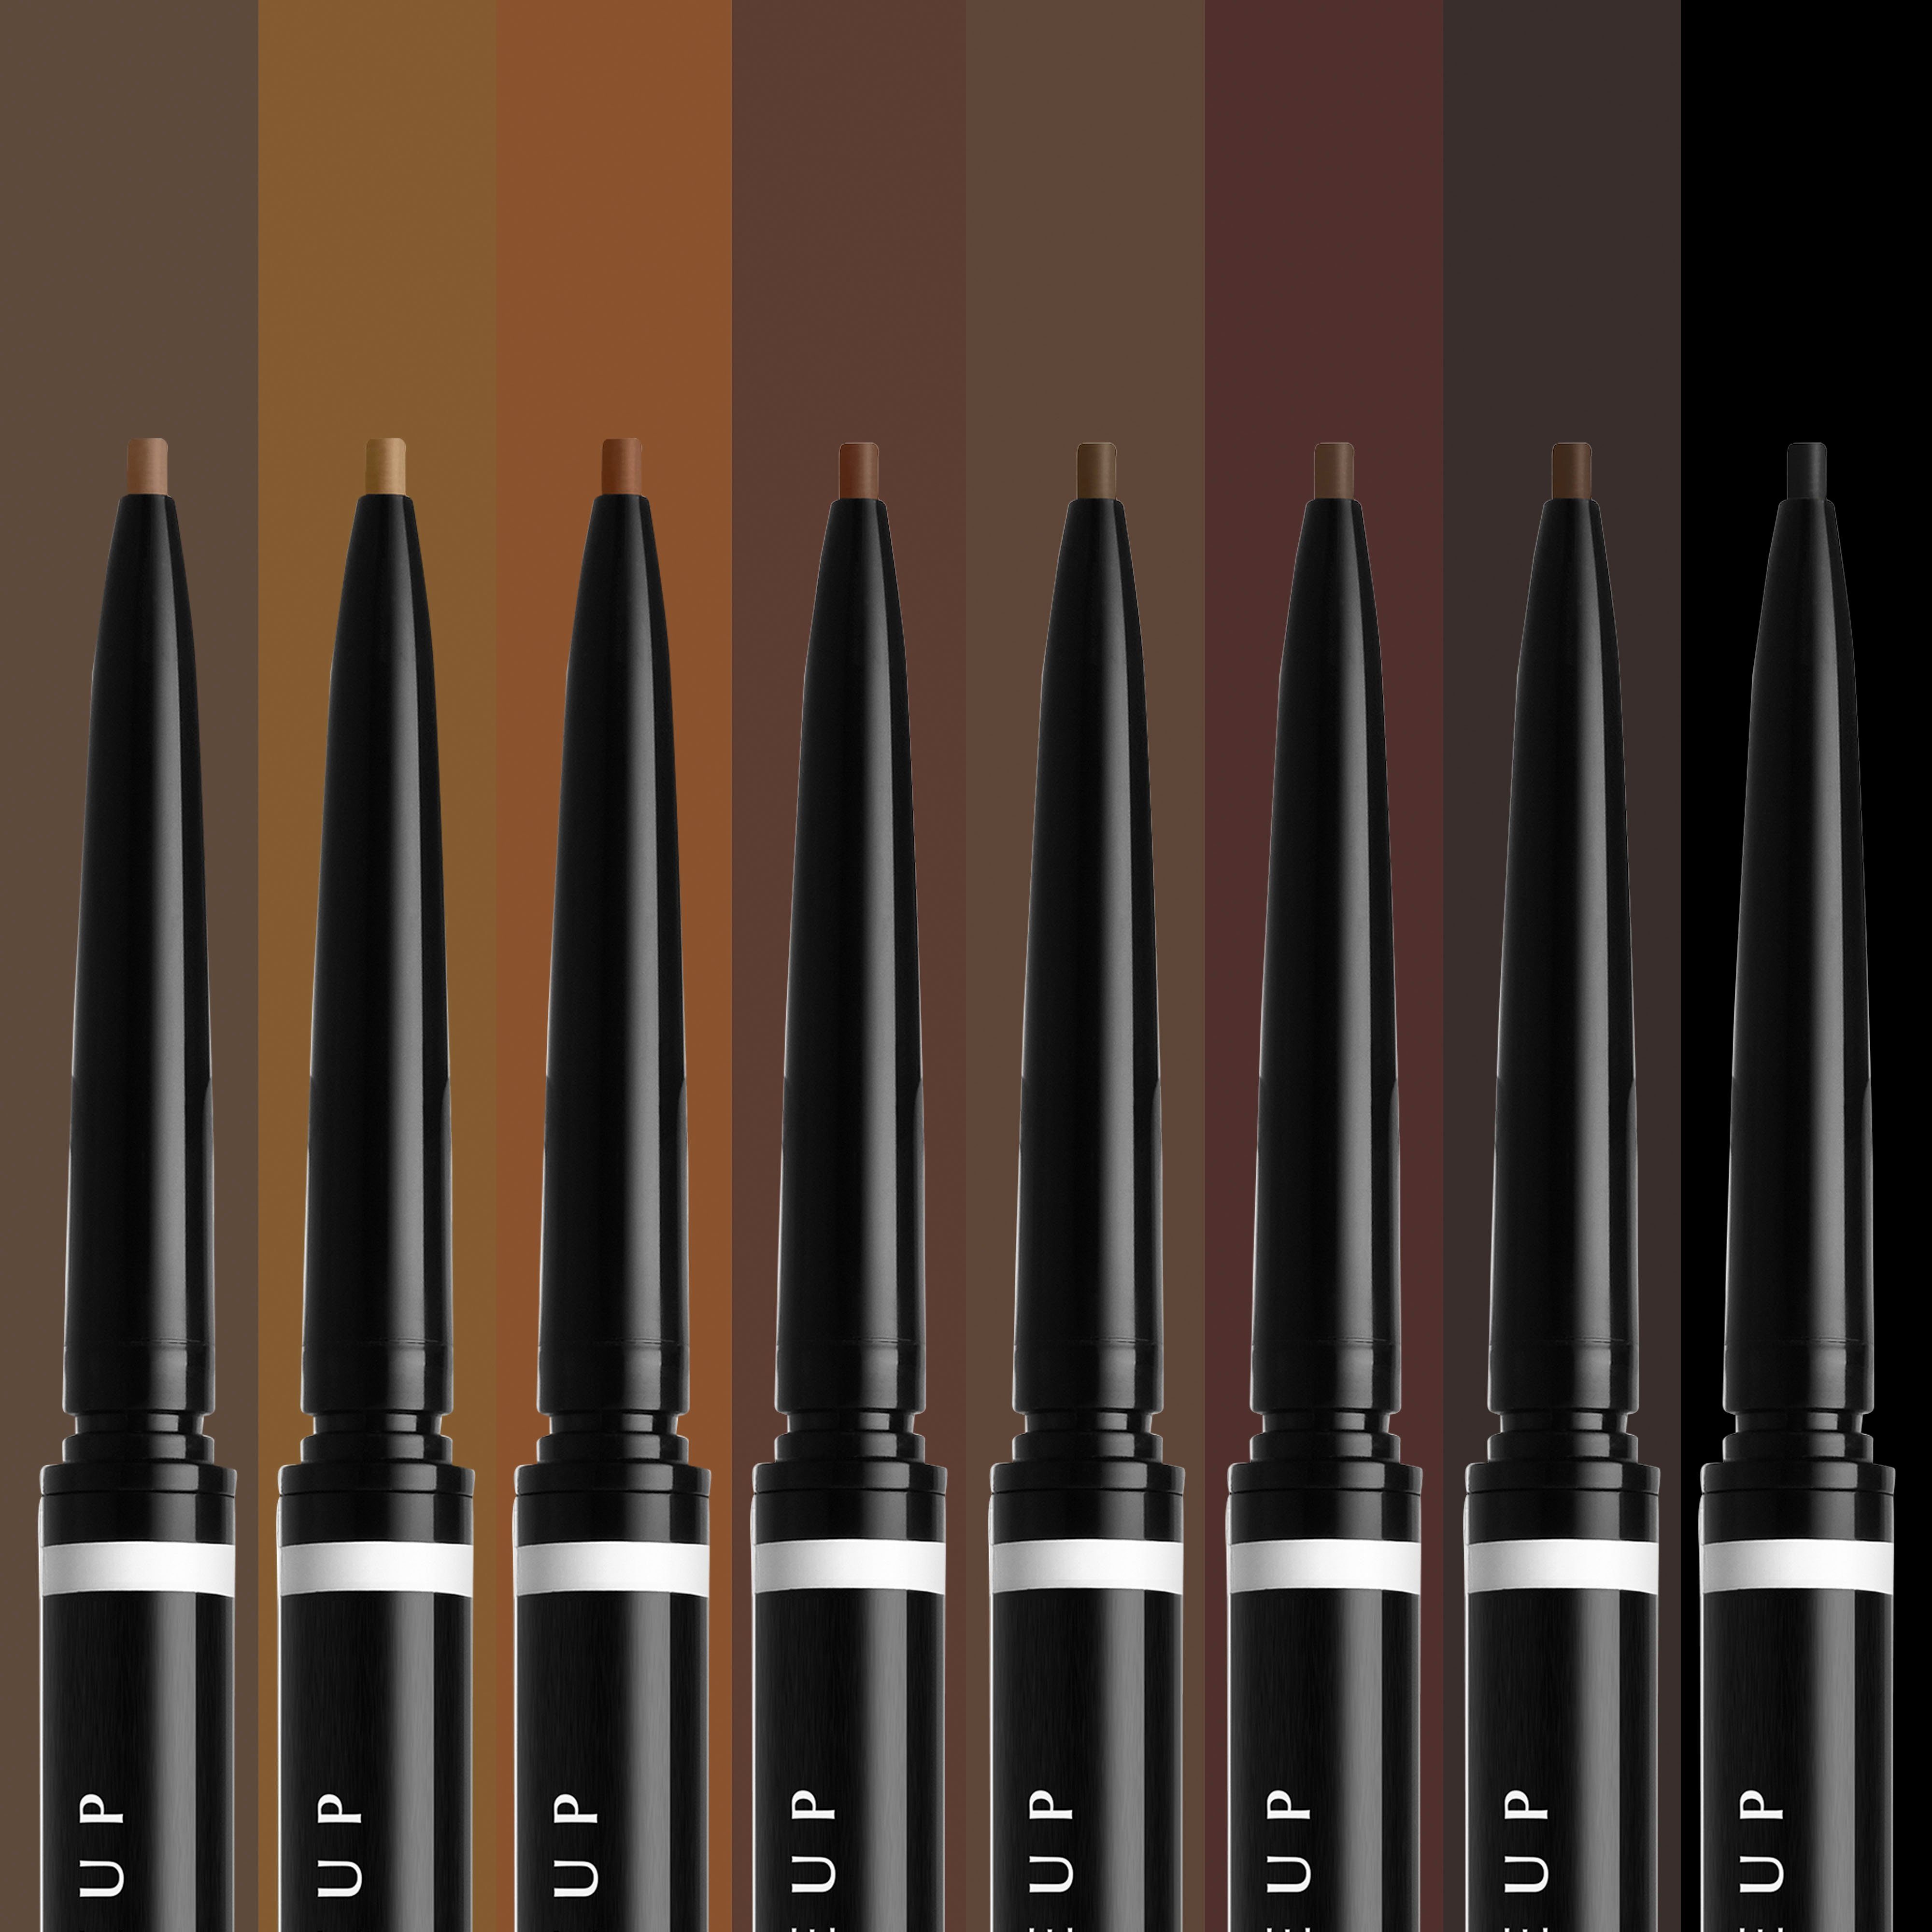 NYX Augenbrauen-Stift Professional Makeup auburn Brow Micro Pencil